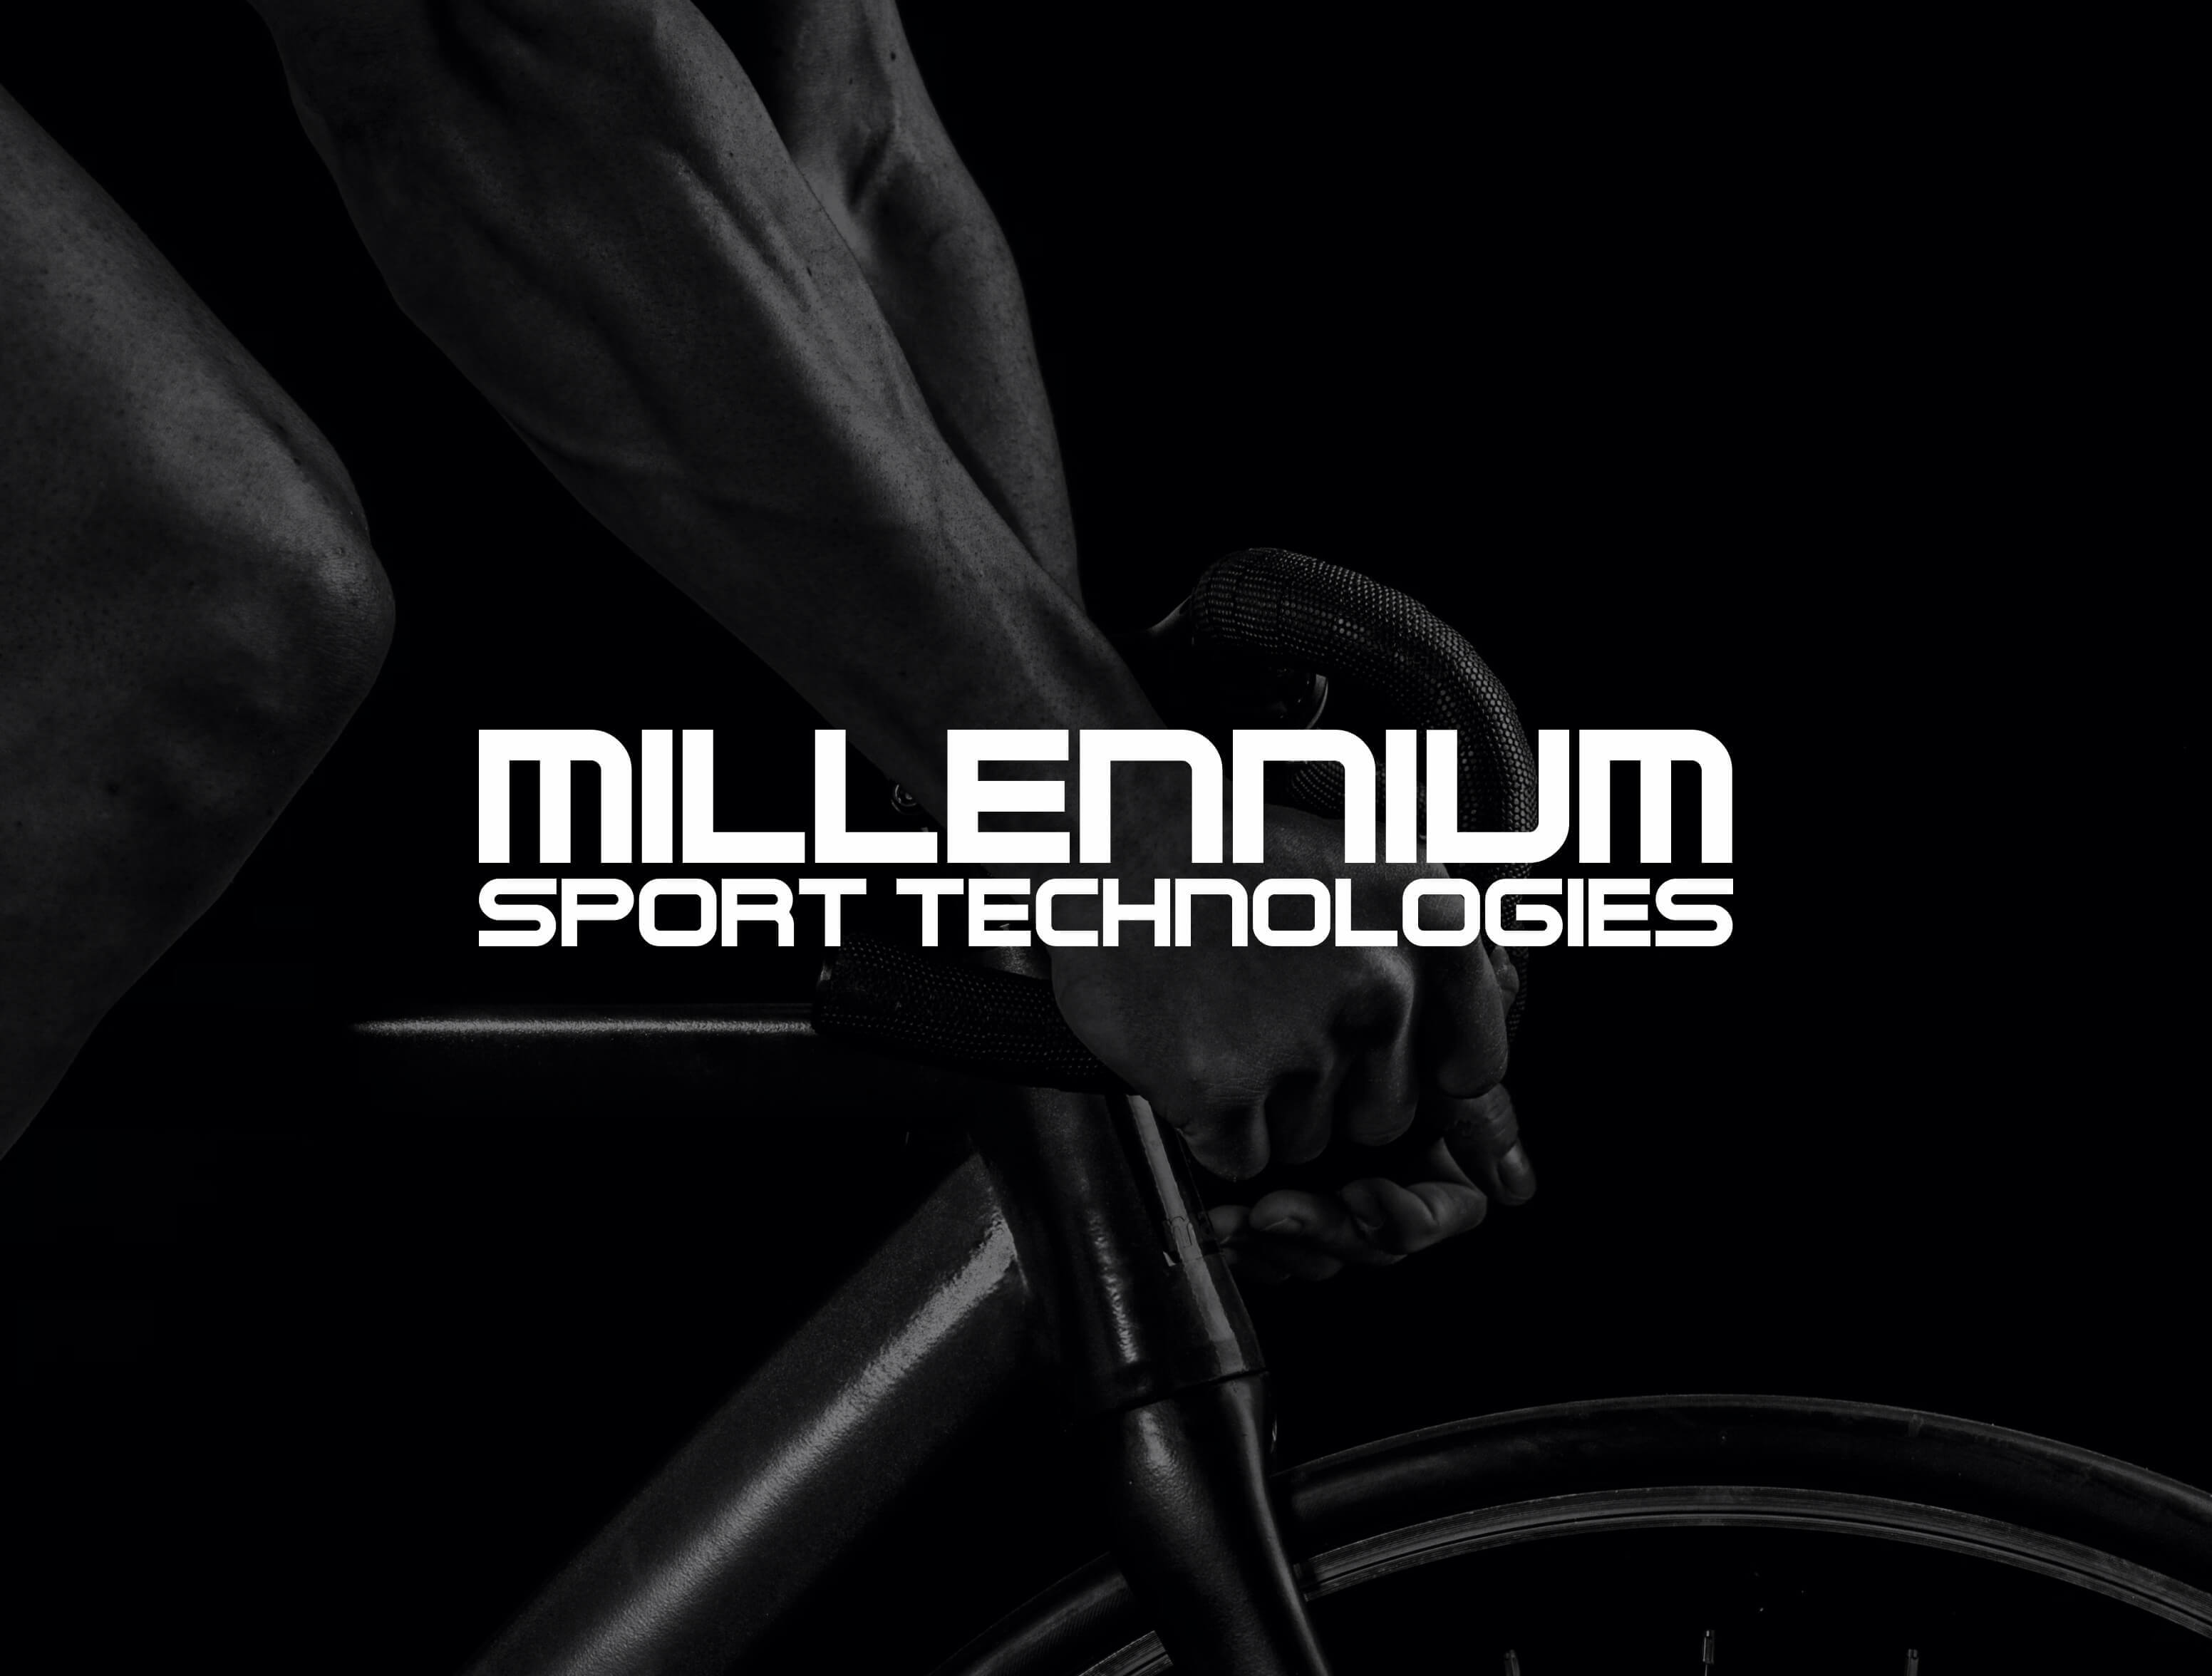 Millennium Sport